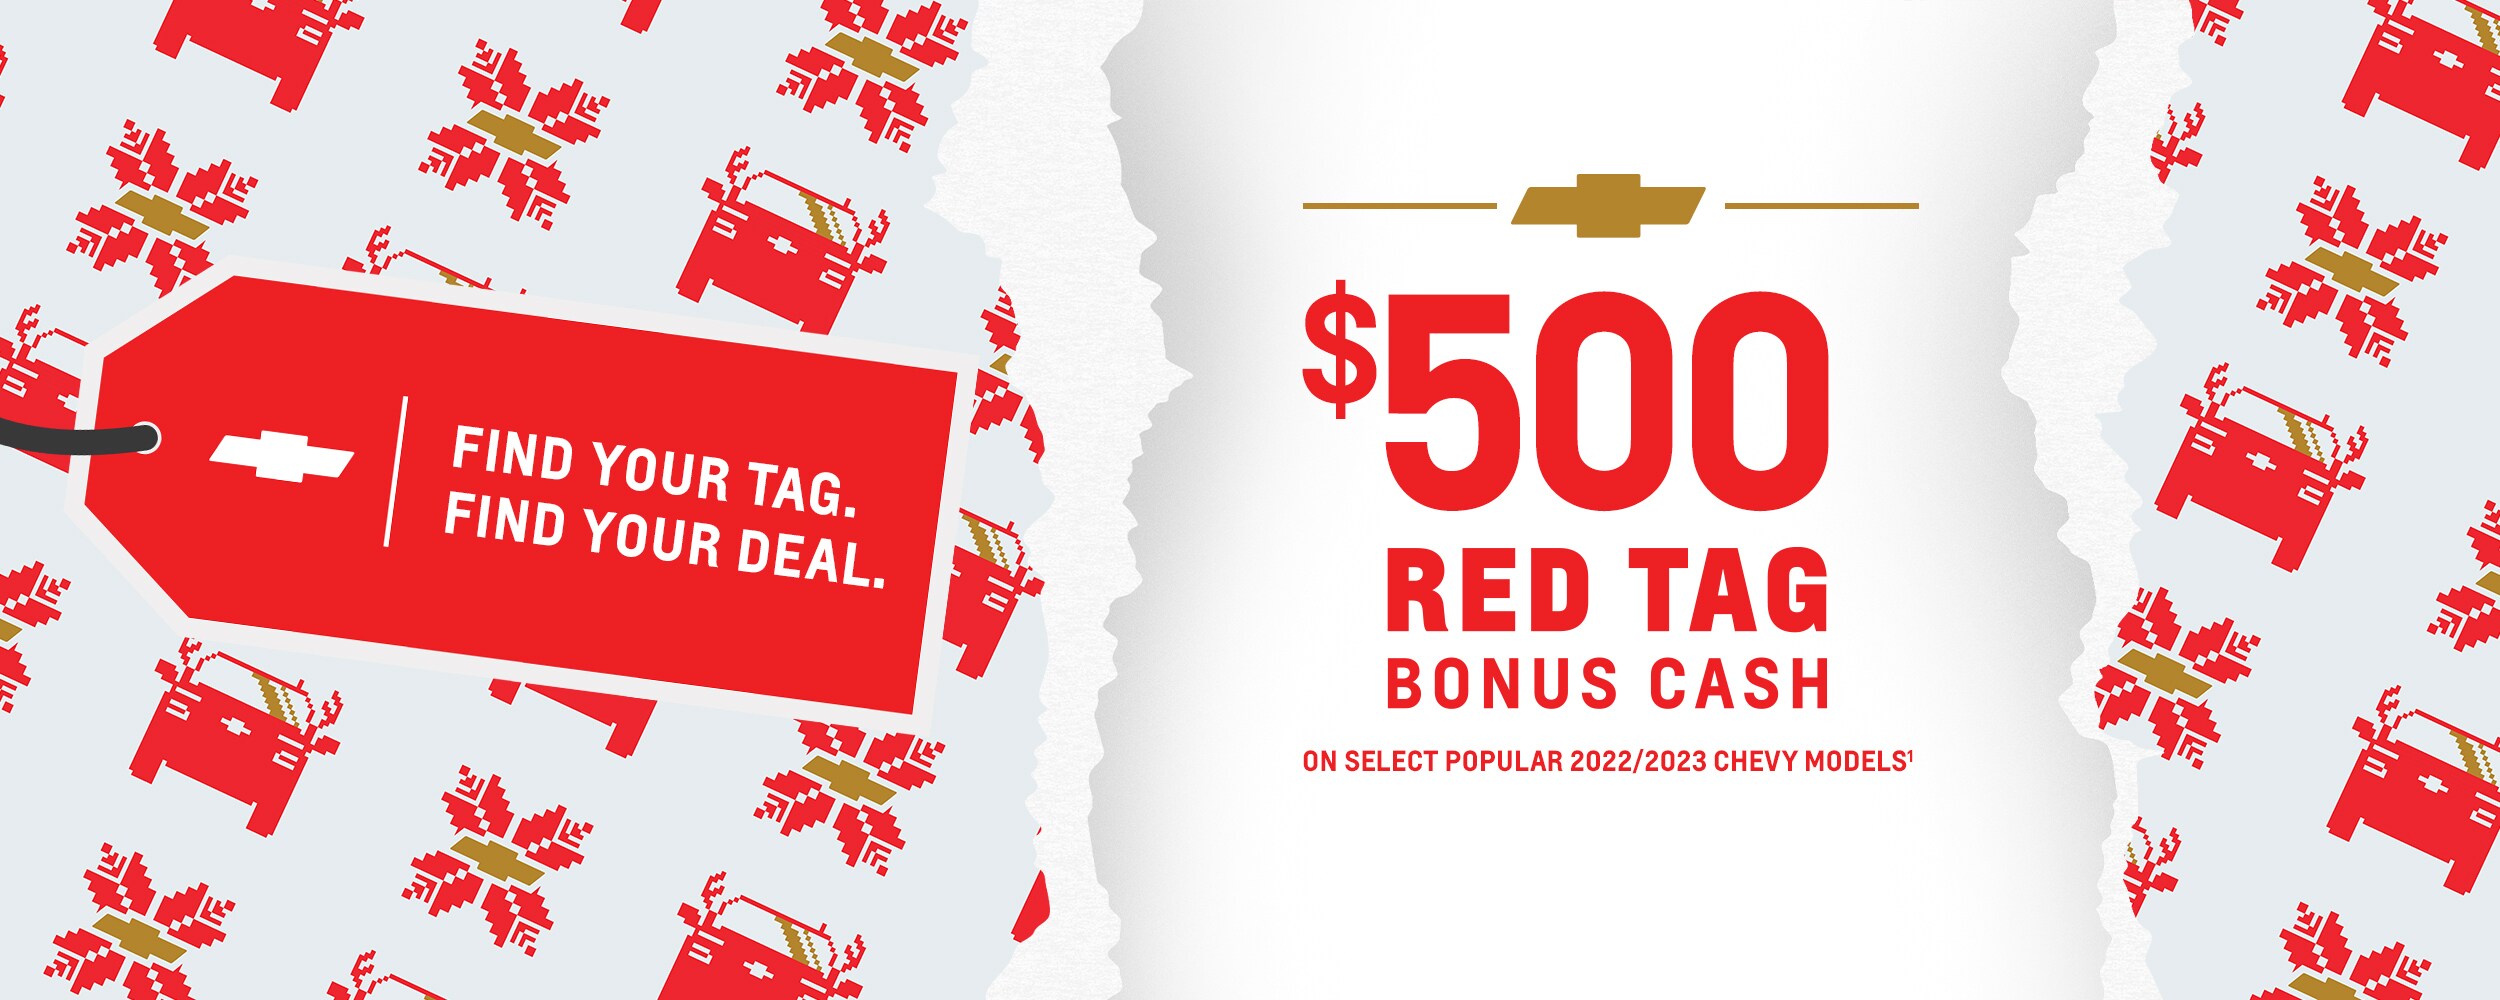  $500 Red Tag Bonus Cash on select popular 2022/2023 Chevy models